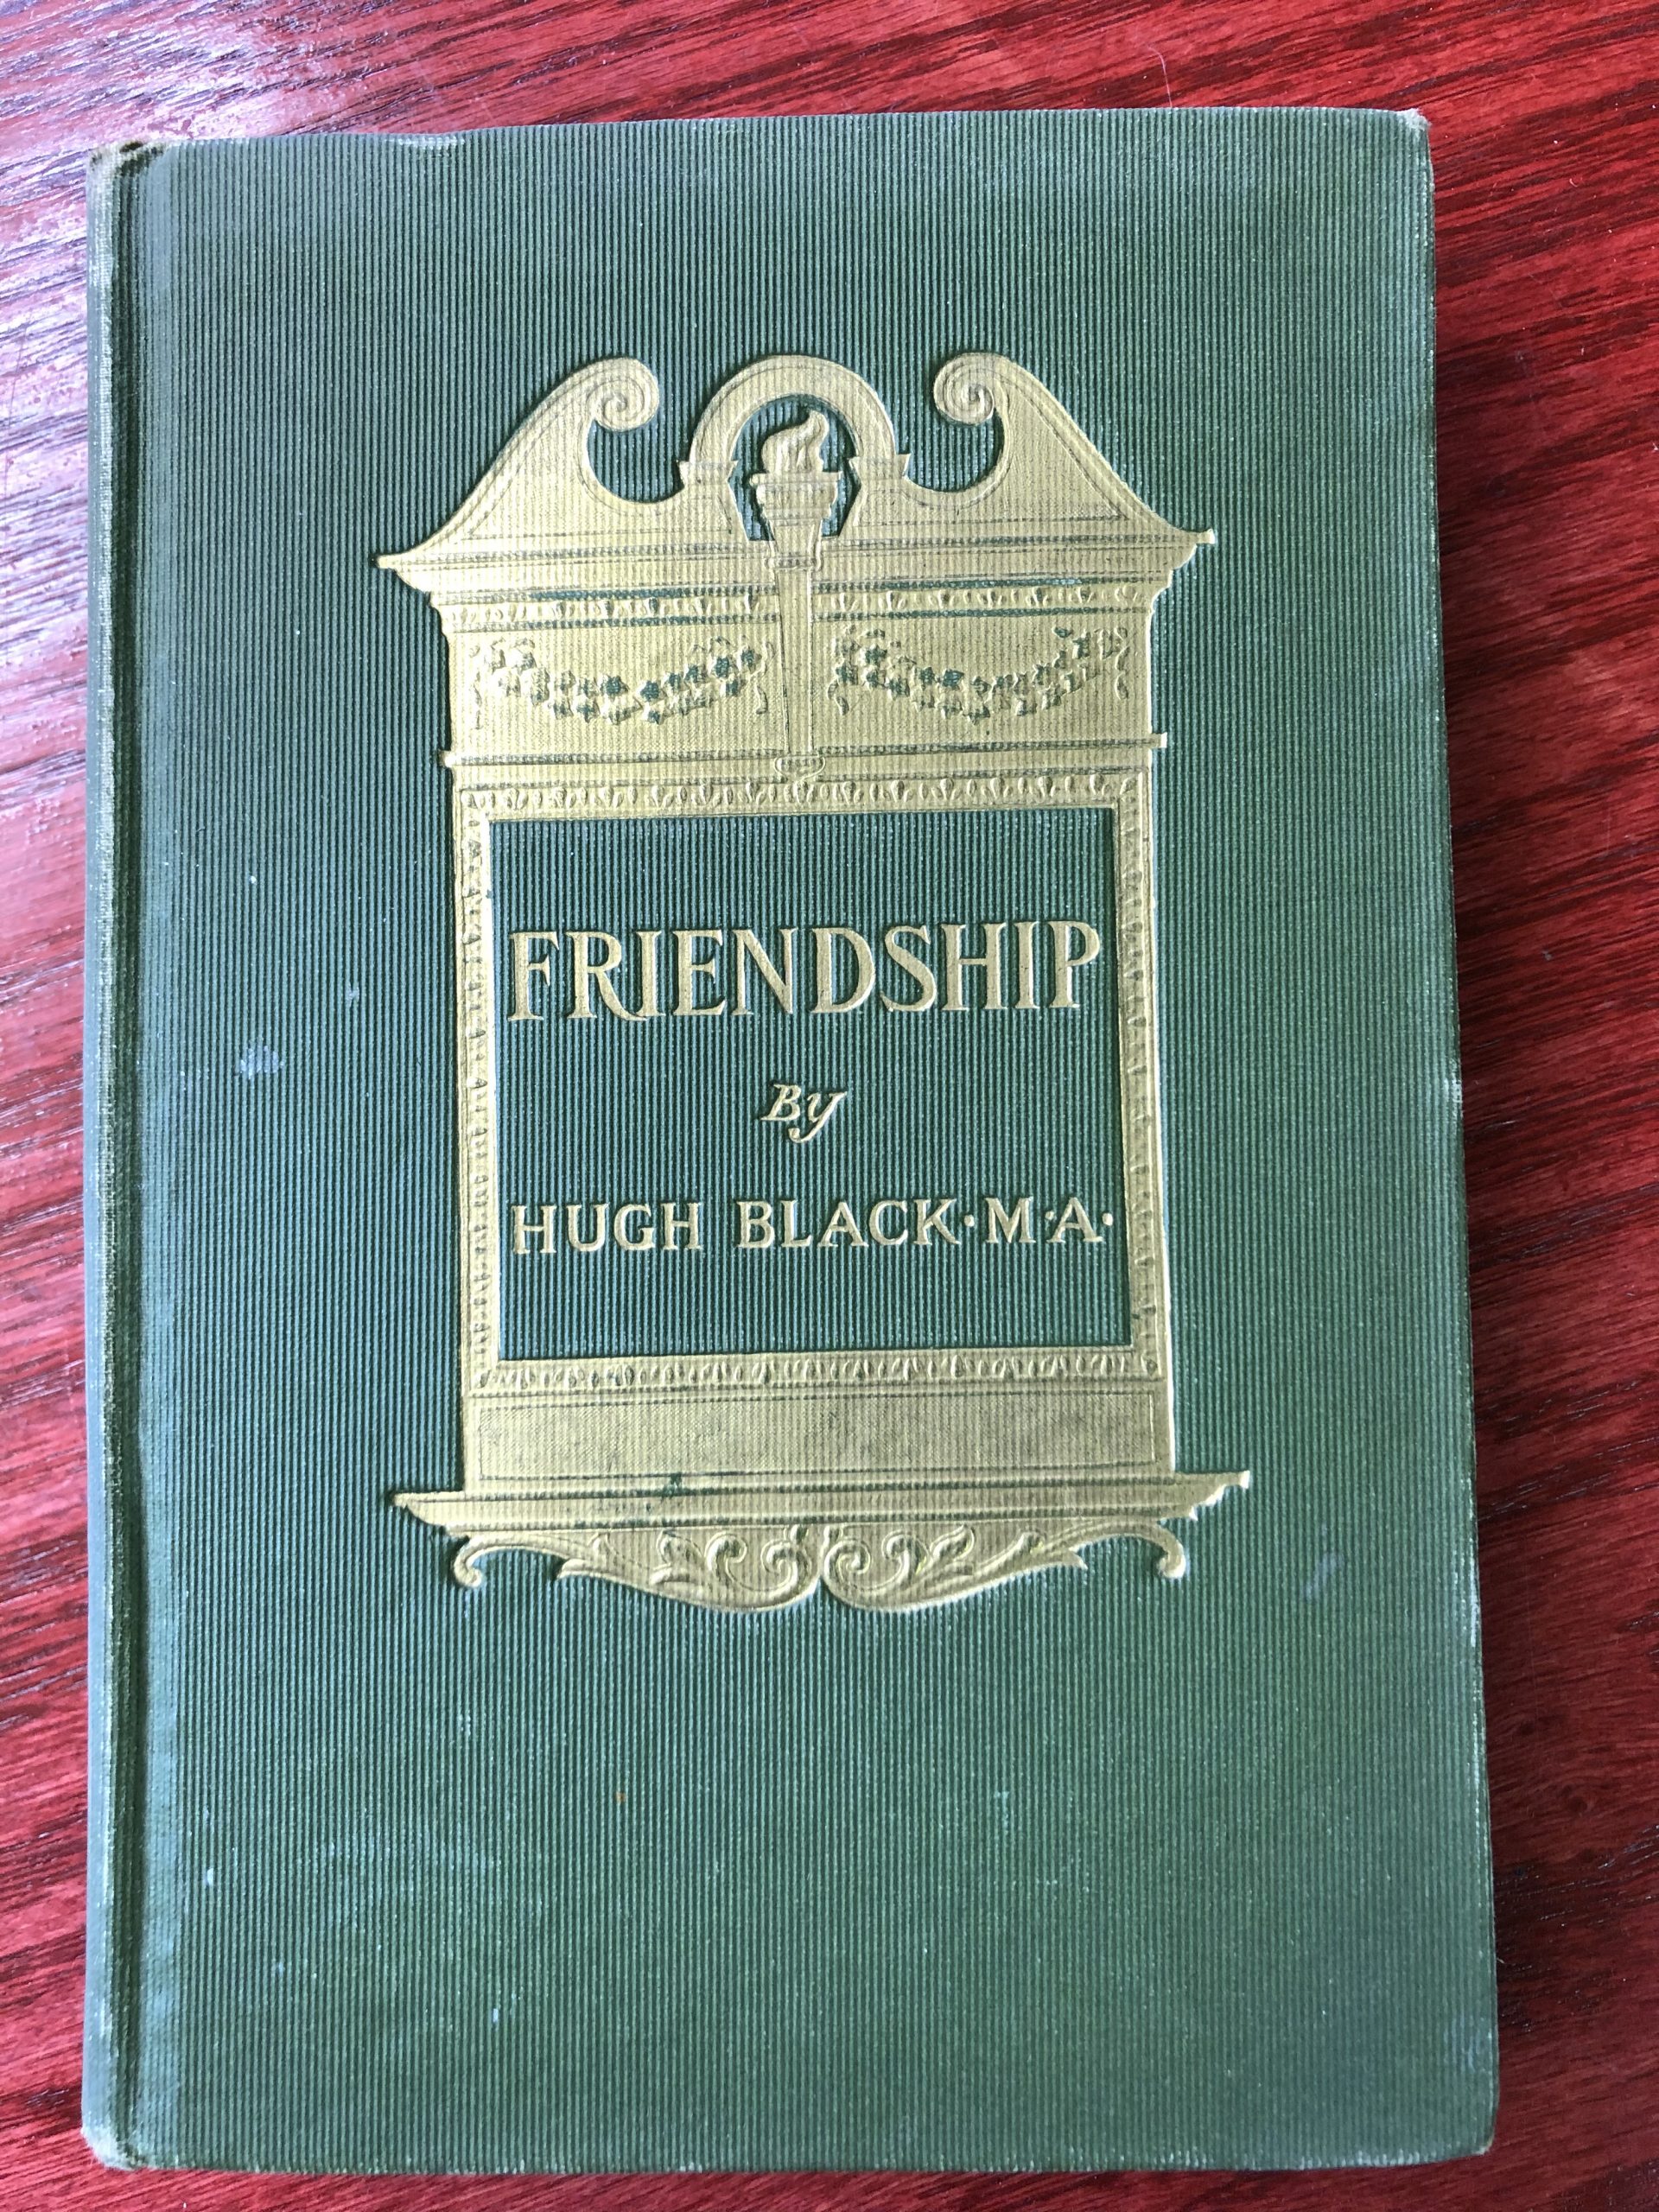 Friendship book image